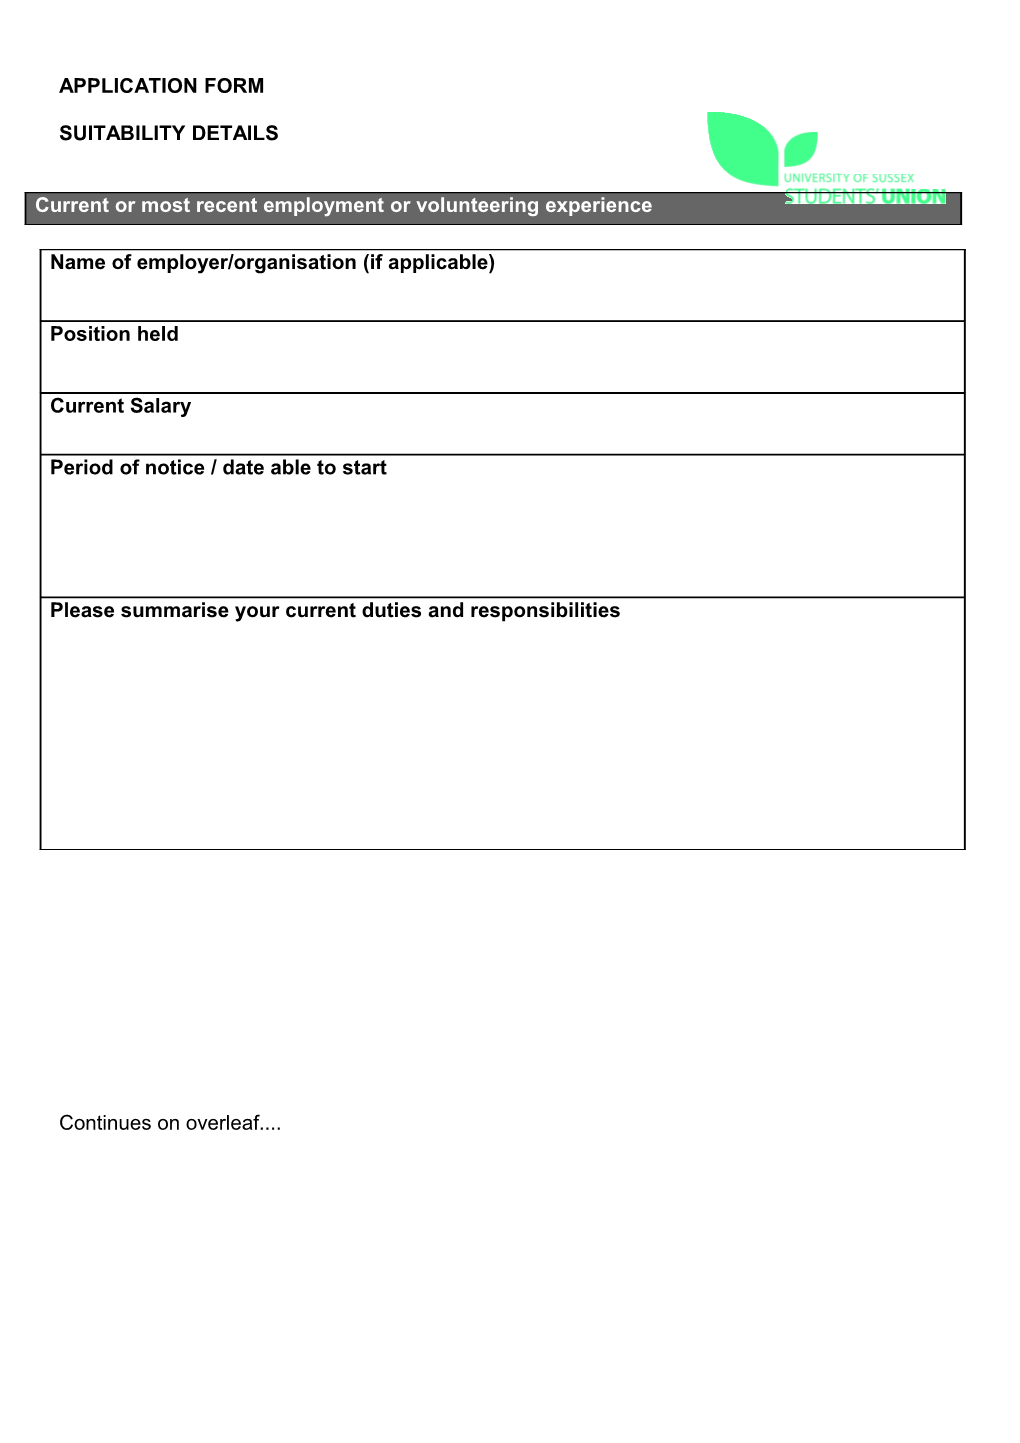 Application Form - Full 1415 s1